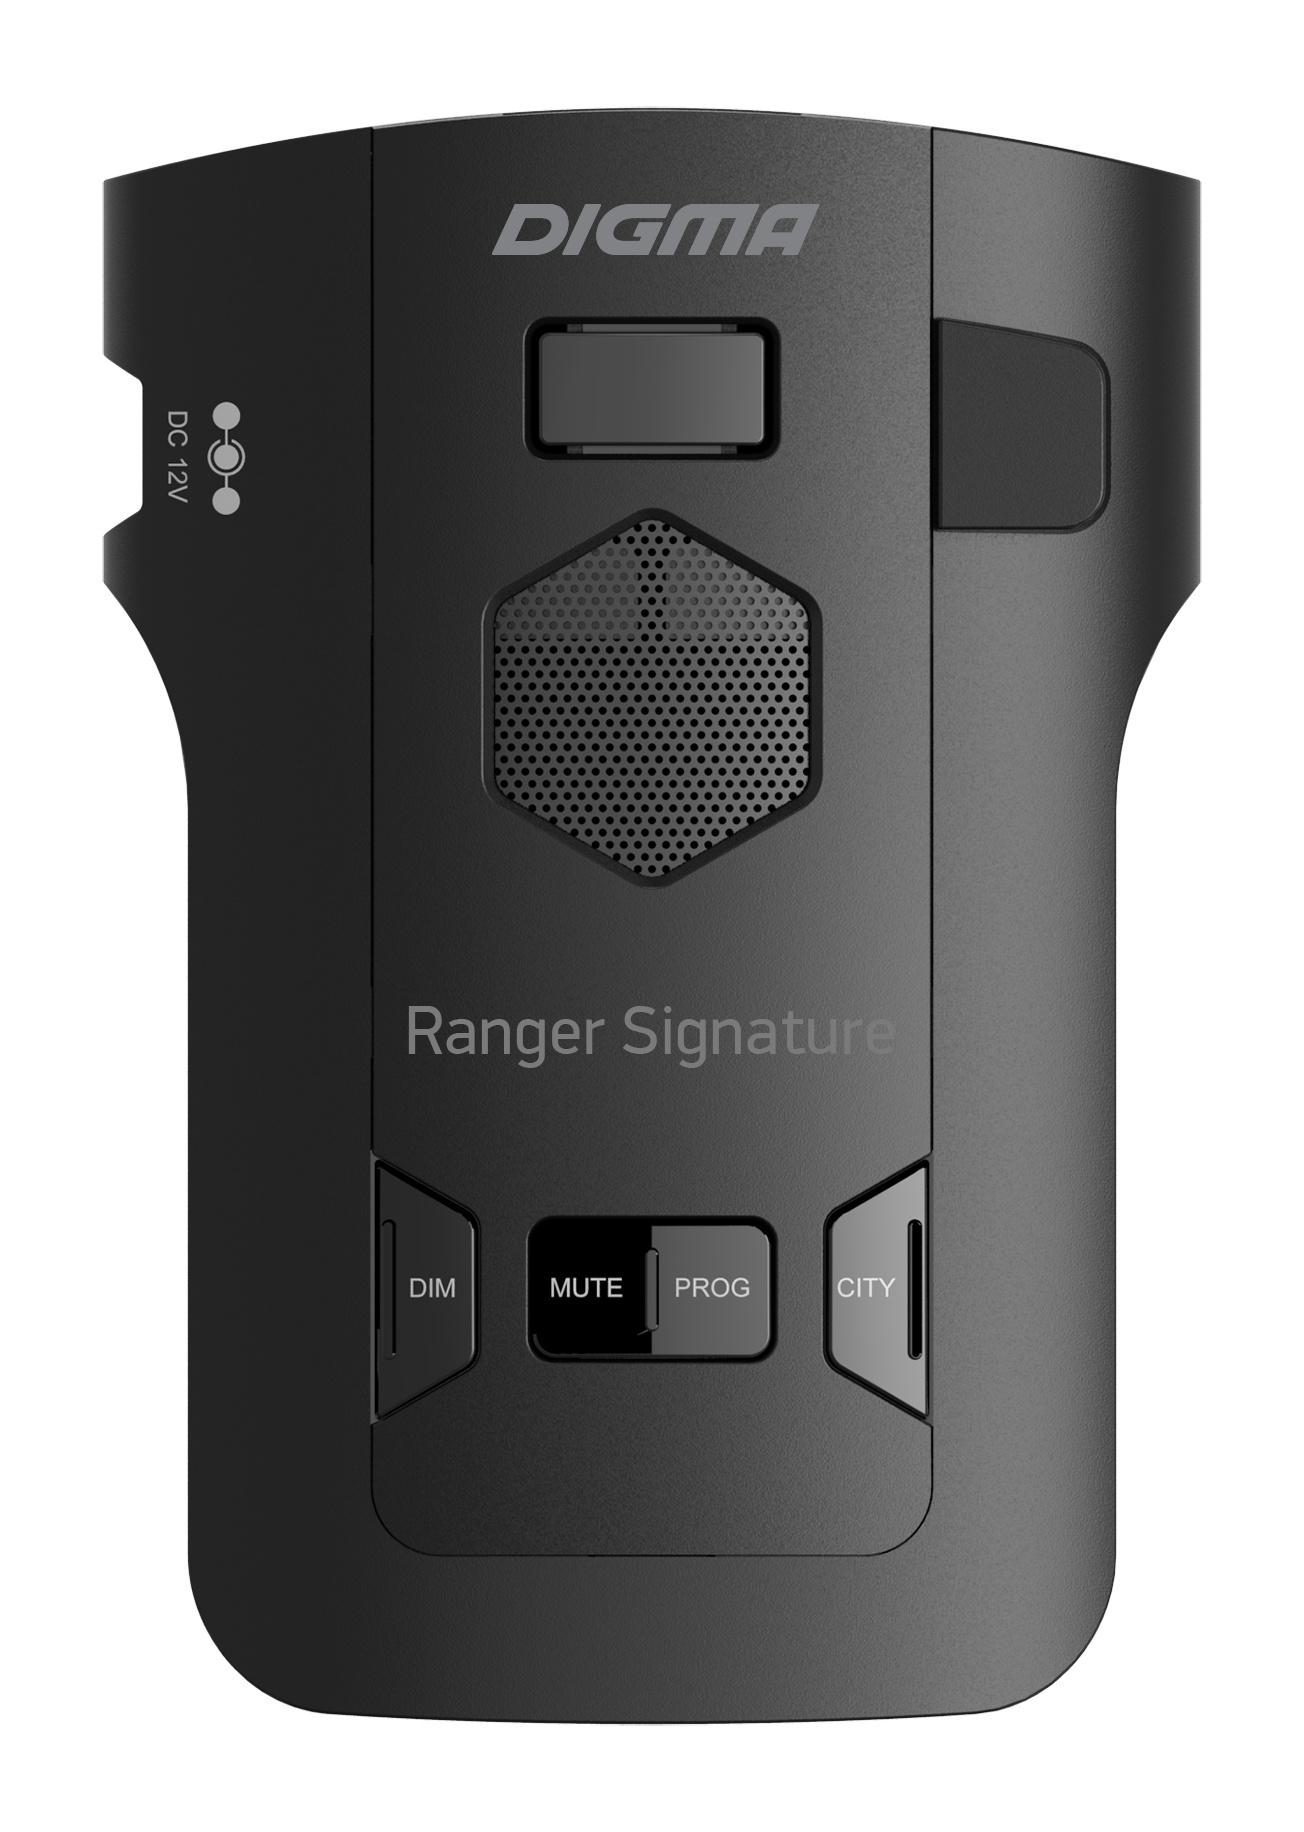 - Digma Ranger Signature GPS  